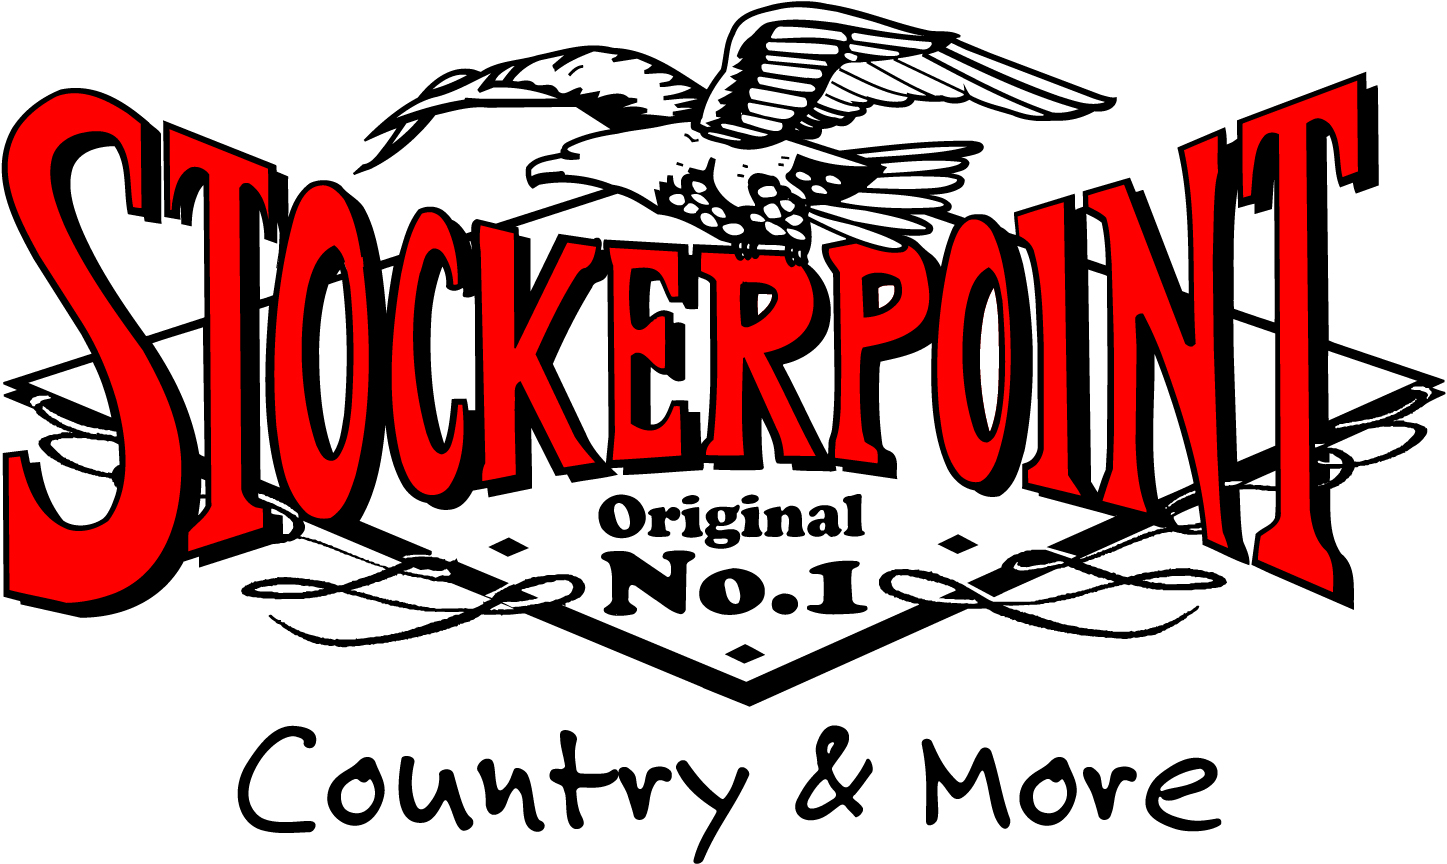 Original Stockerpoint